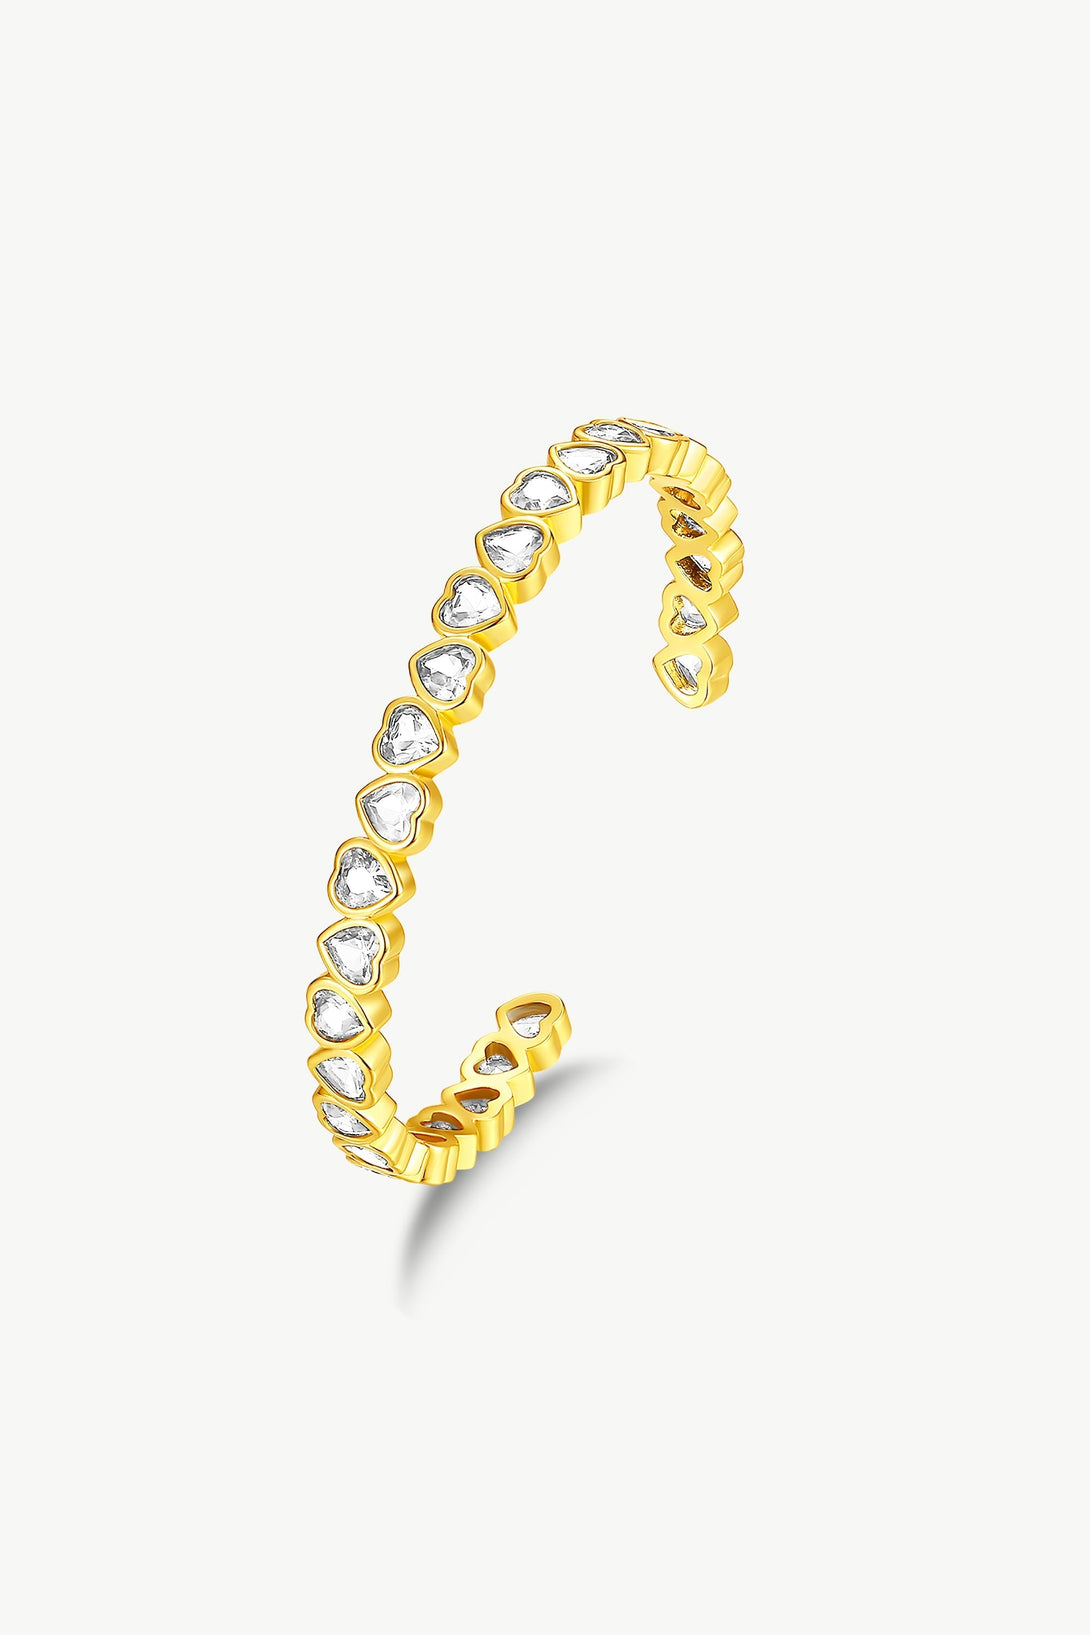 Gold Heart Shaped Zirconia Bangle Bracelet Set - Classicharms